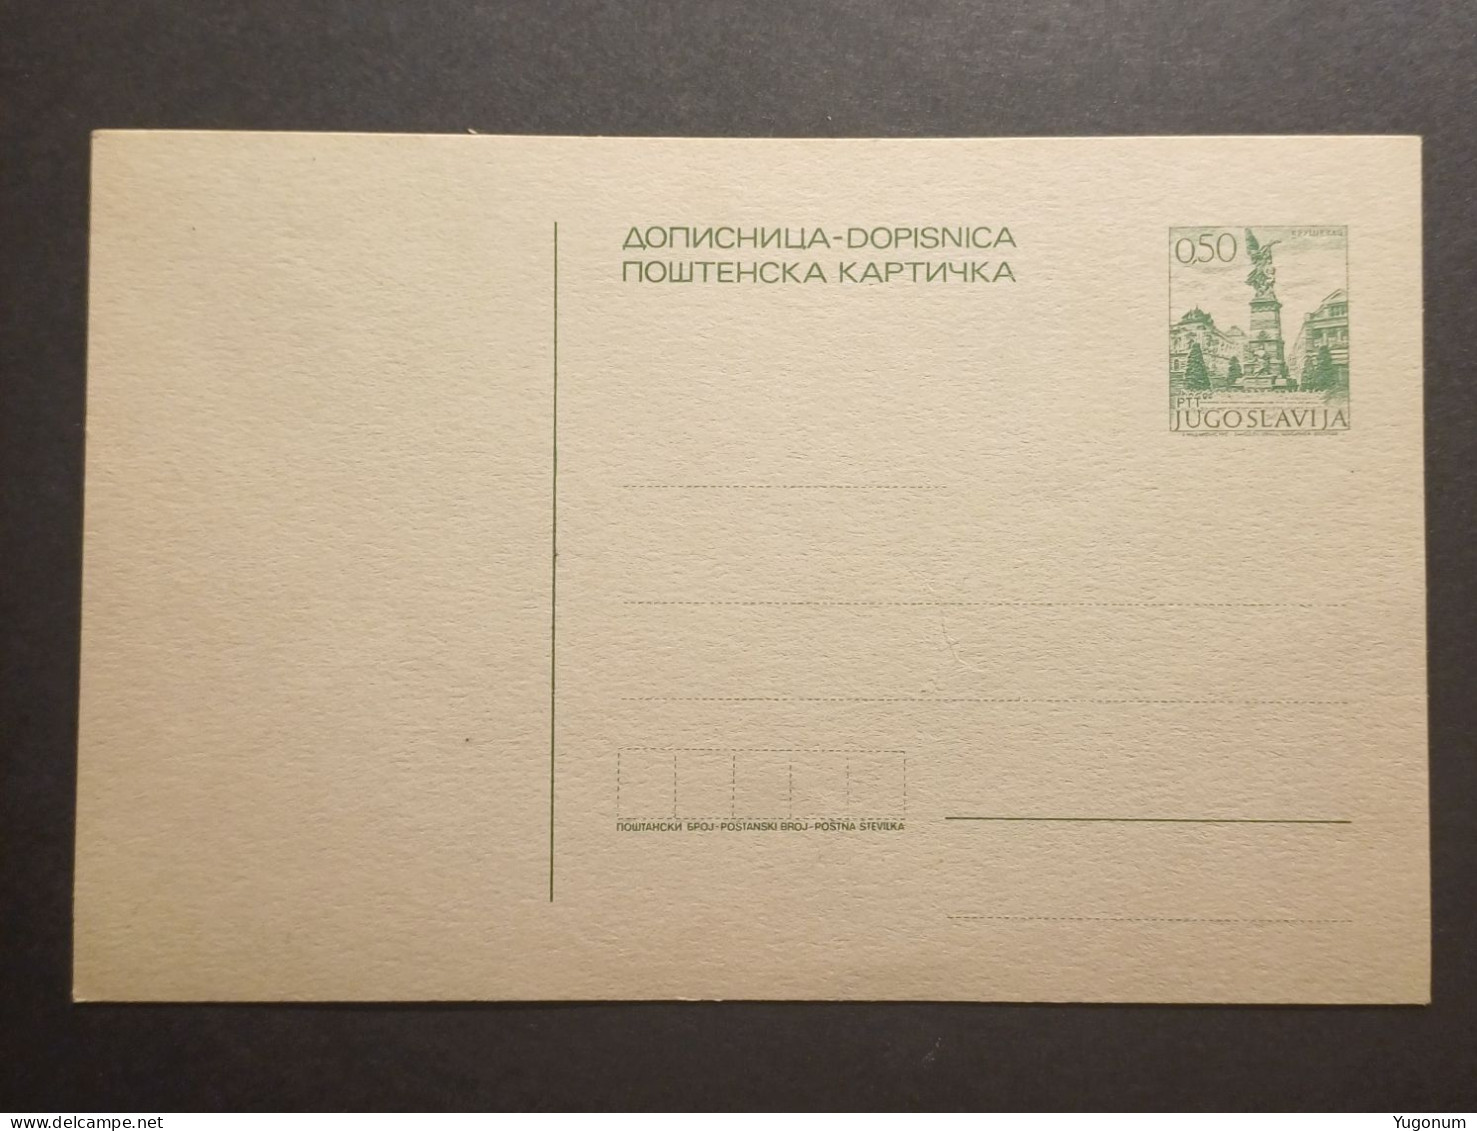 Yugoslavia Slovenia 1970's Unused Stationary Card "dopisnica" With Preprinted 0,50 Dinara Stamp (No 3010) - Covers & Documents